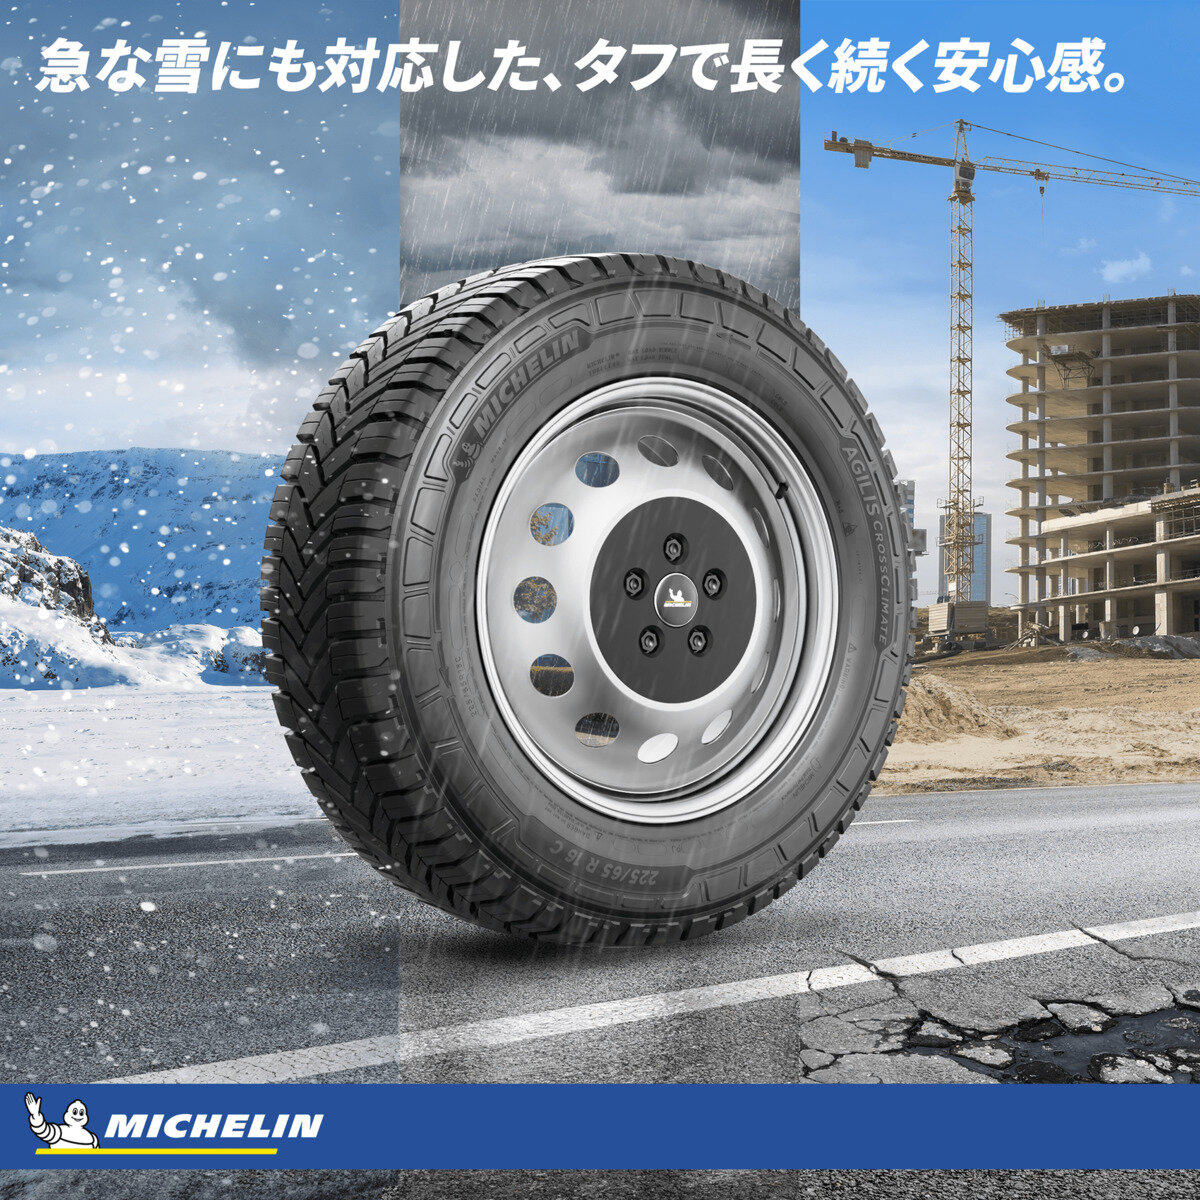 Michelin 195/80 R15C 108/106S TL AGILIS CC PR8 DT MI Co...